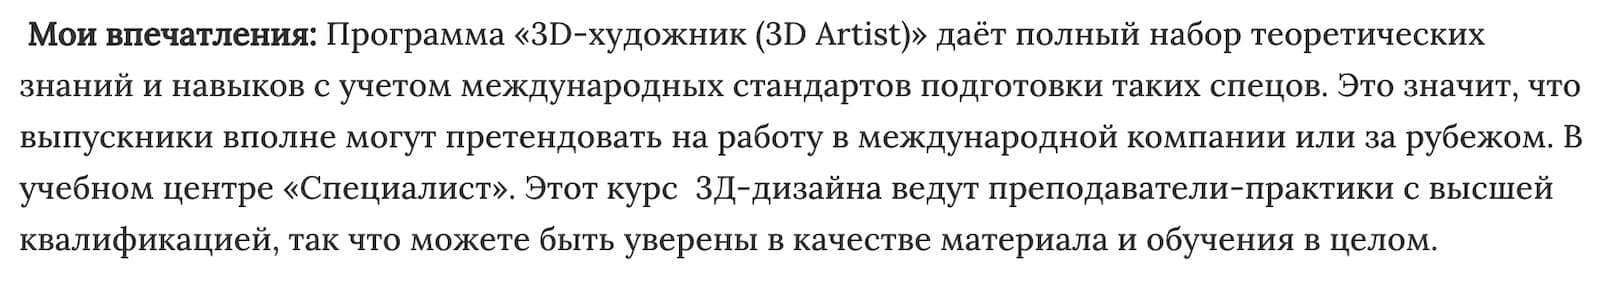 Мнение редакции «3D - художник (3D Artist)» от Специалист.ru